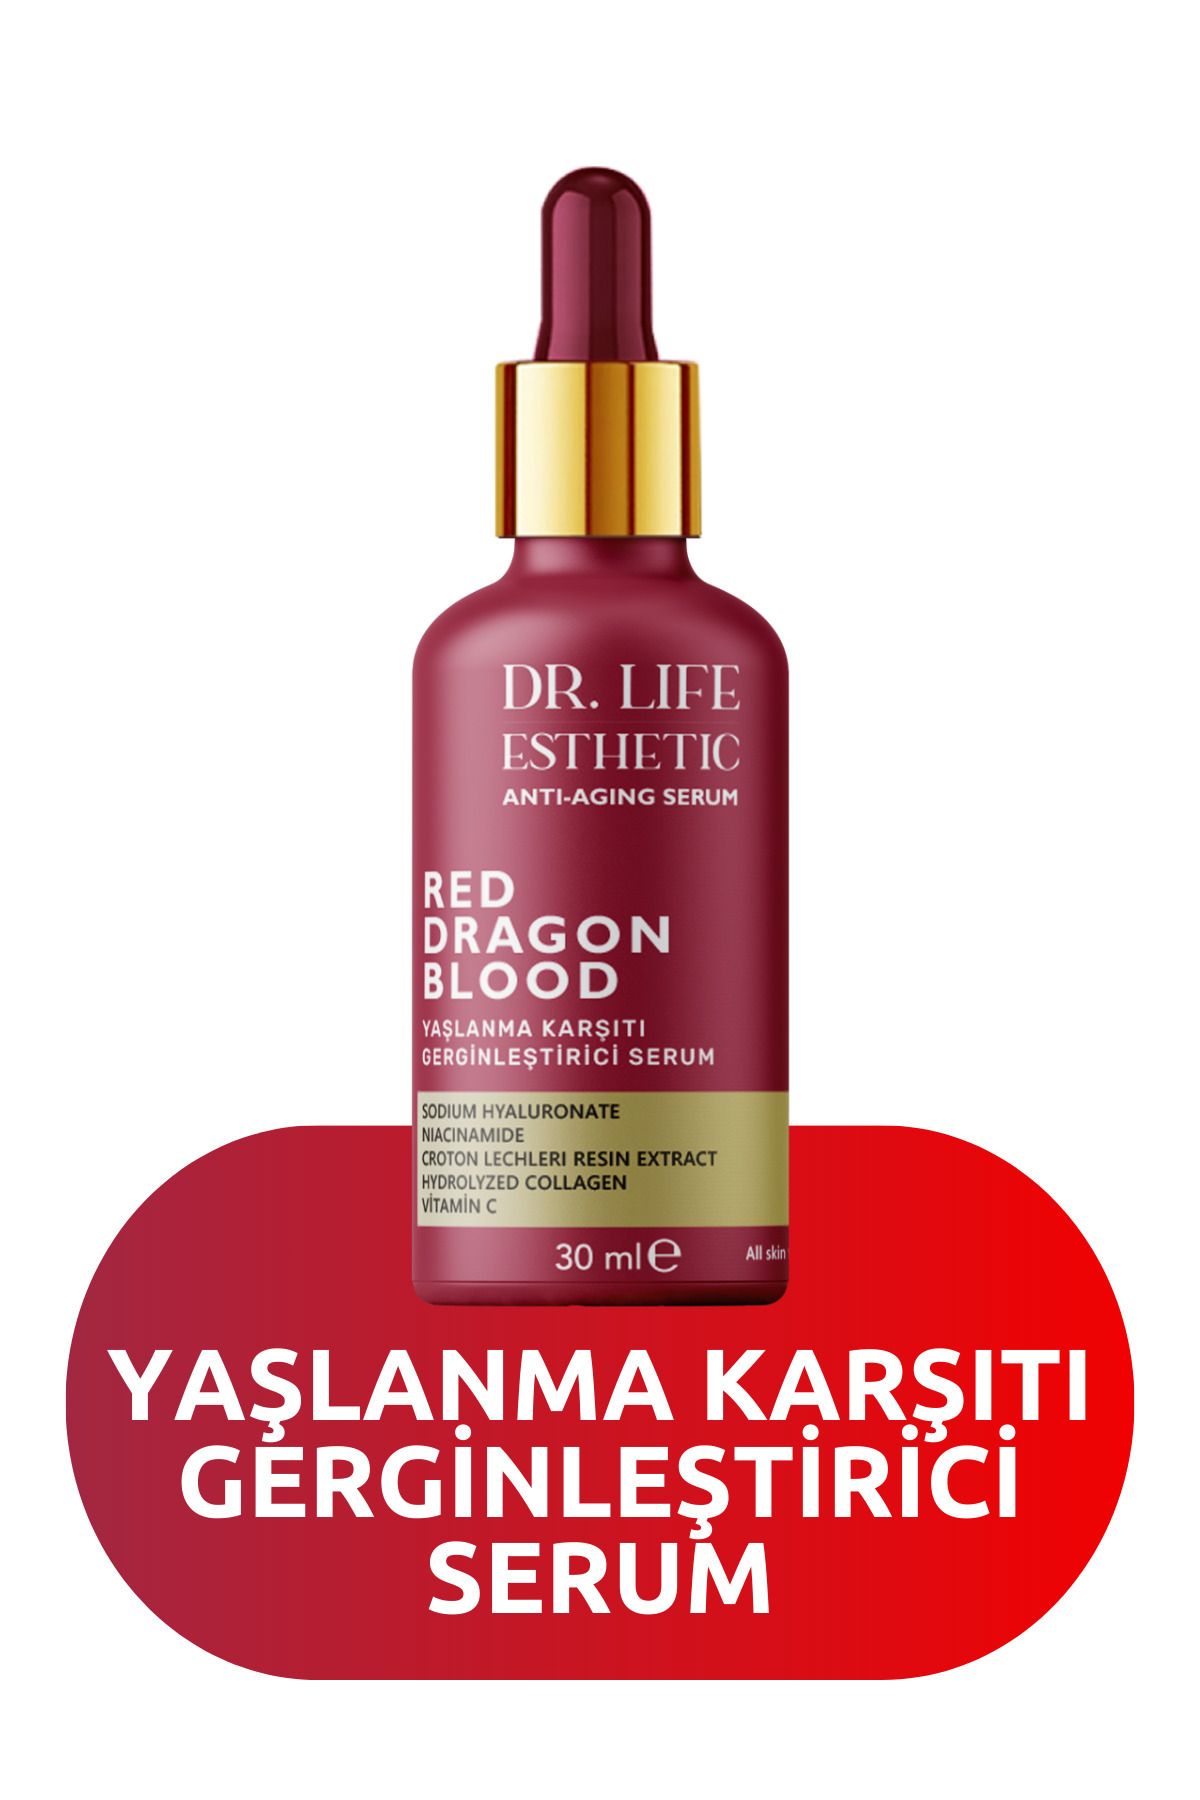 DR LIFE ESTHETIC Red Dragon Blood Yaşlanma Karşıtı Gerginleştirici Serum Anti-aging Serum 30ml